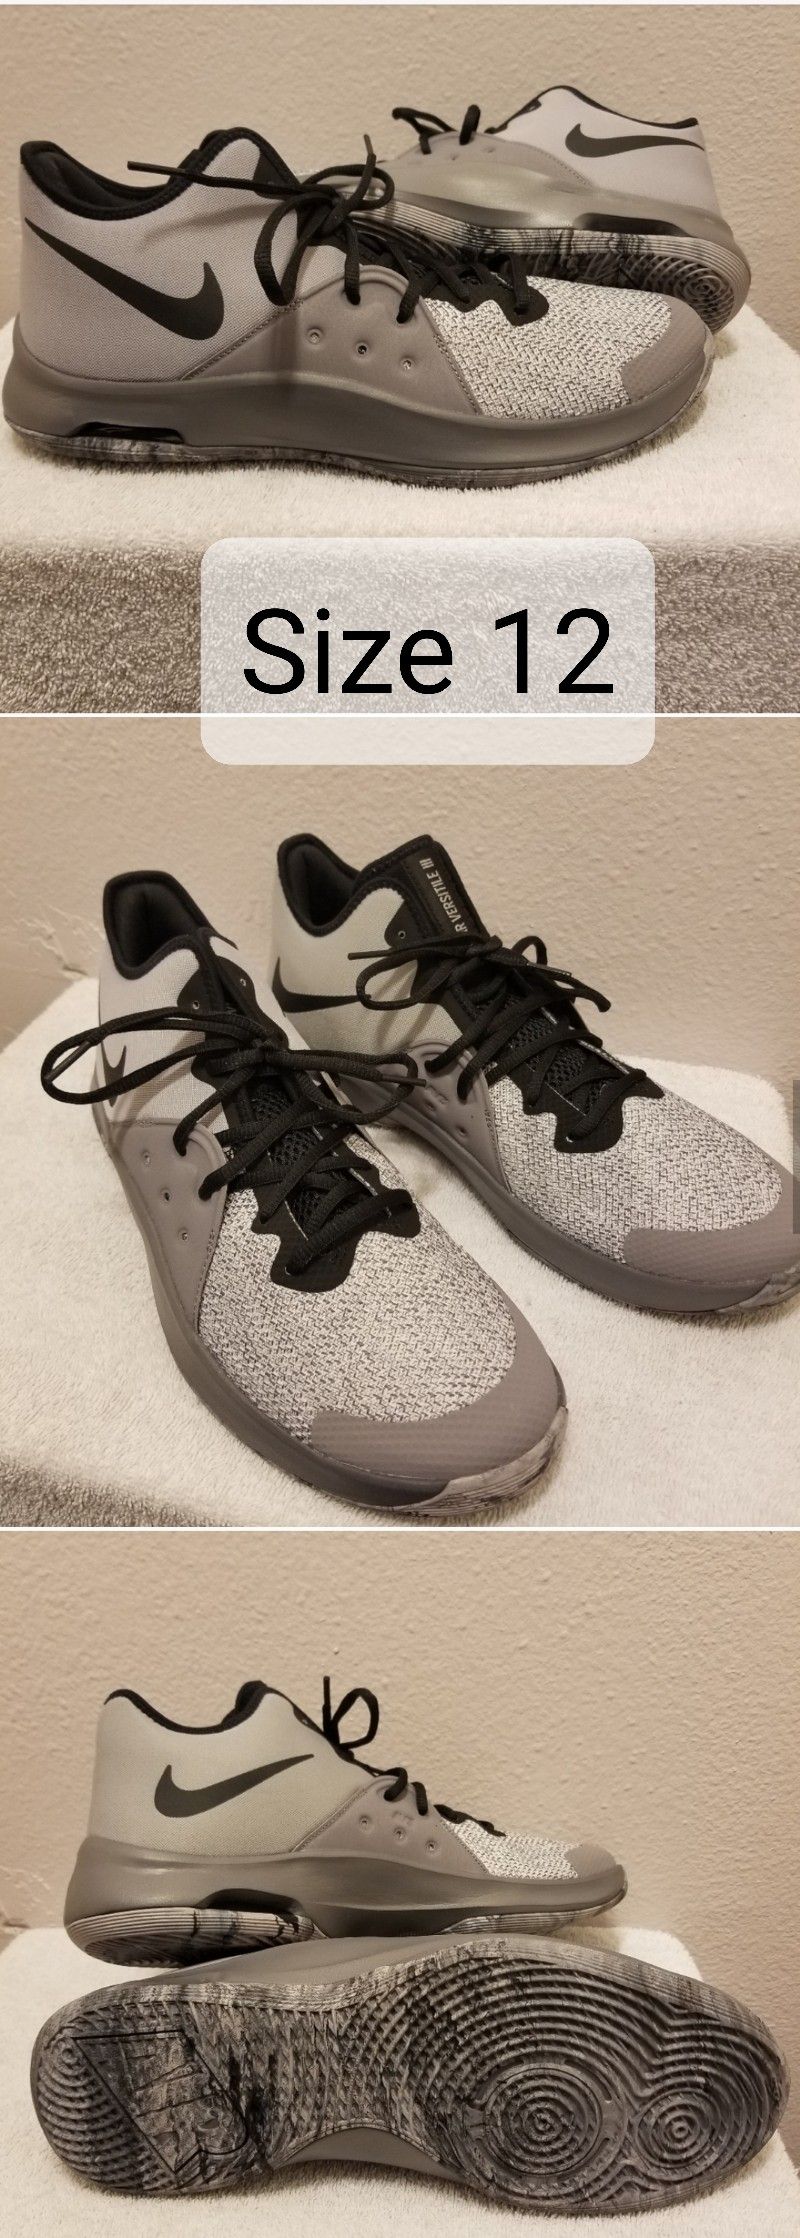 Nike Air Versitile III Basketball Shoes Atmosphere Gray AO4430-011 Men's NEW